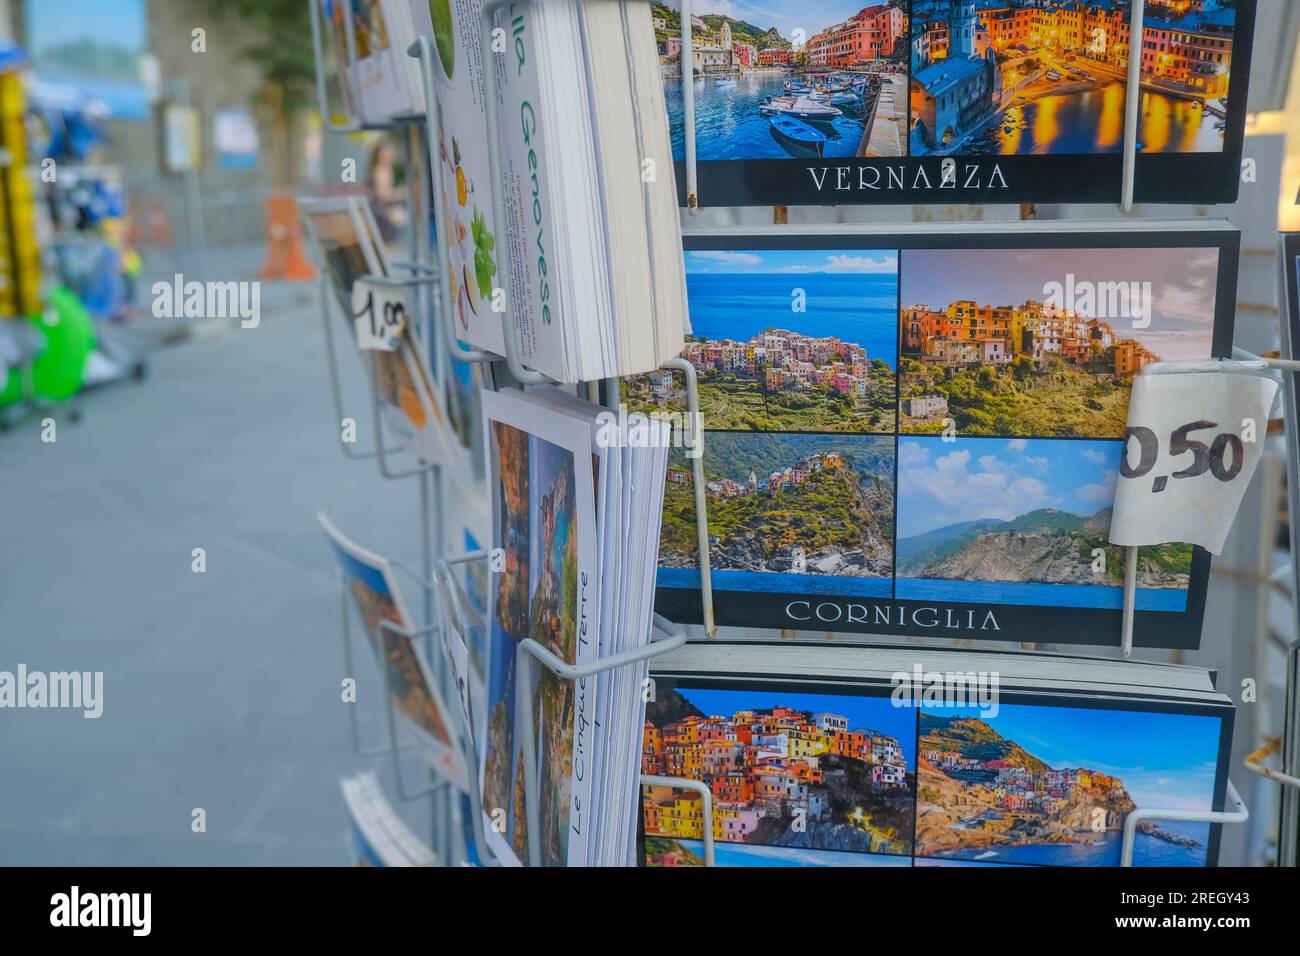 Monterosso, Italien: Postkarten mit Fotos von Orten des Nationalparks Cinque Terre und des Dorfes Corniglia, Vernazza Stockfoto